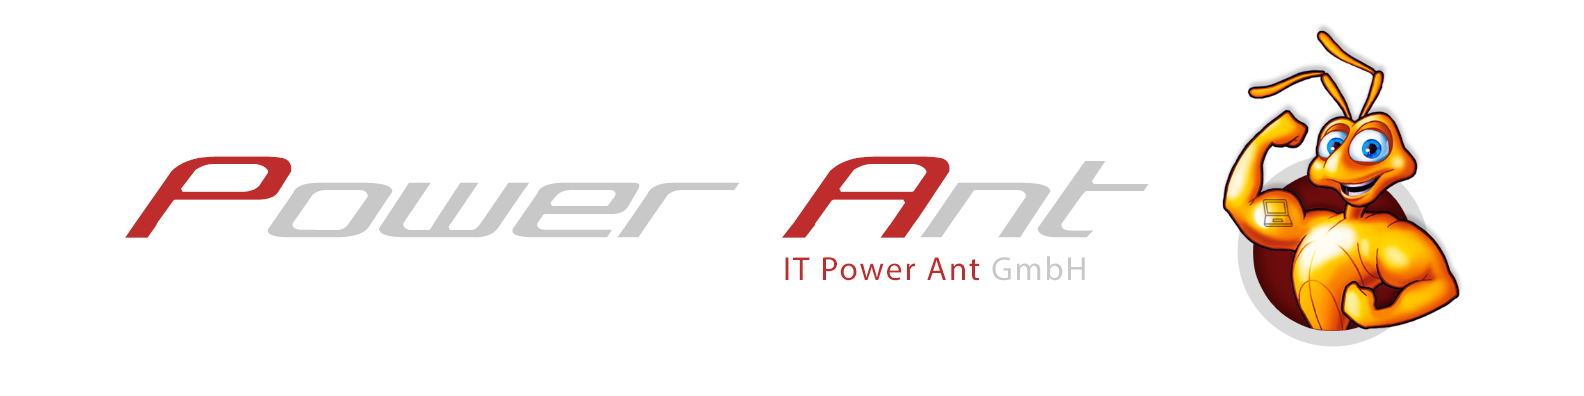 IT Power Ant GmbH